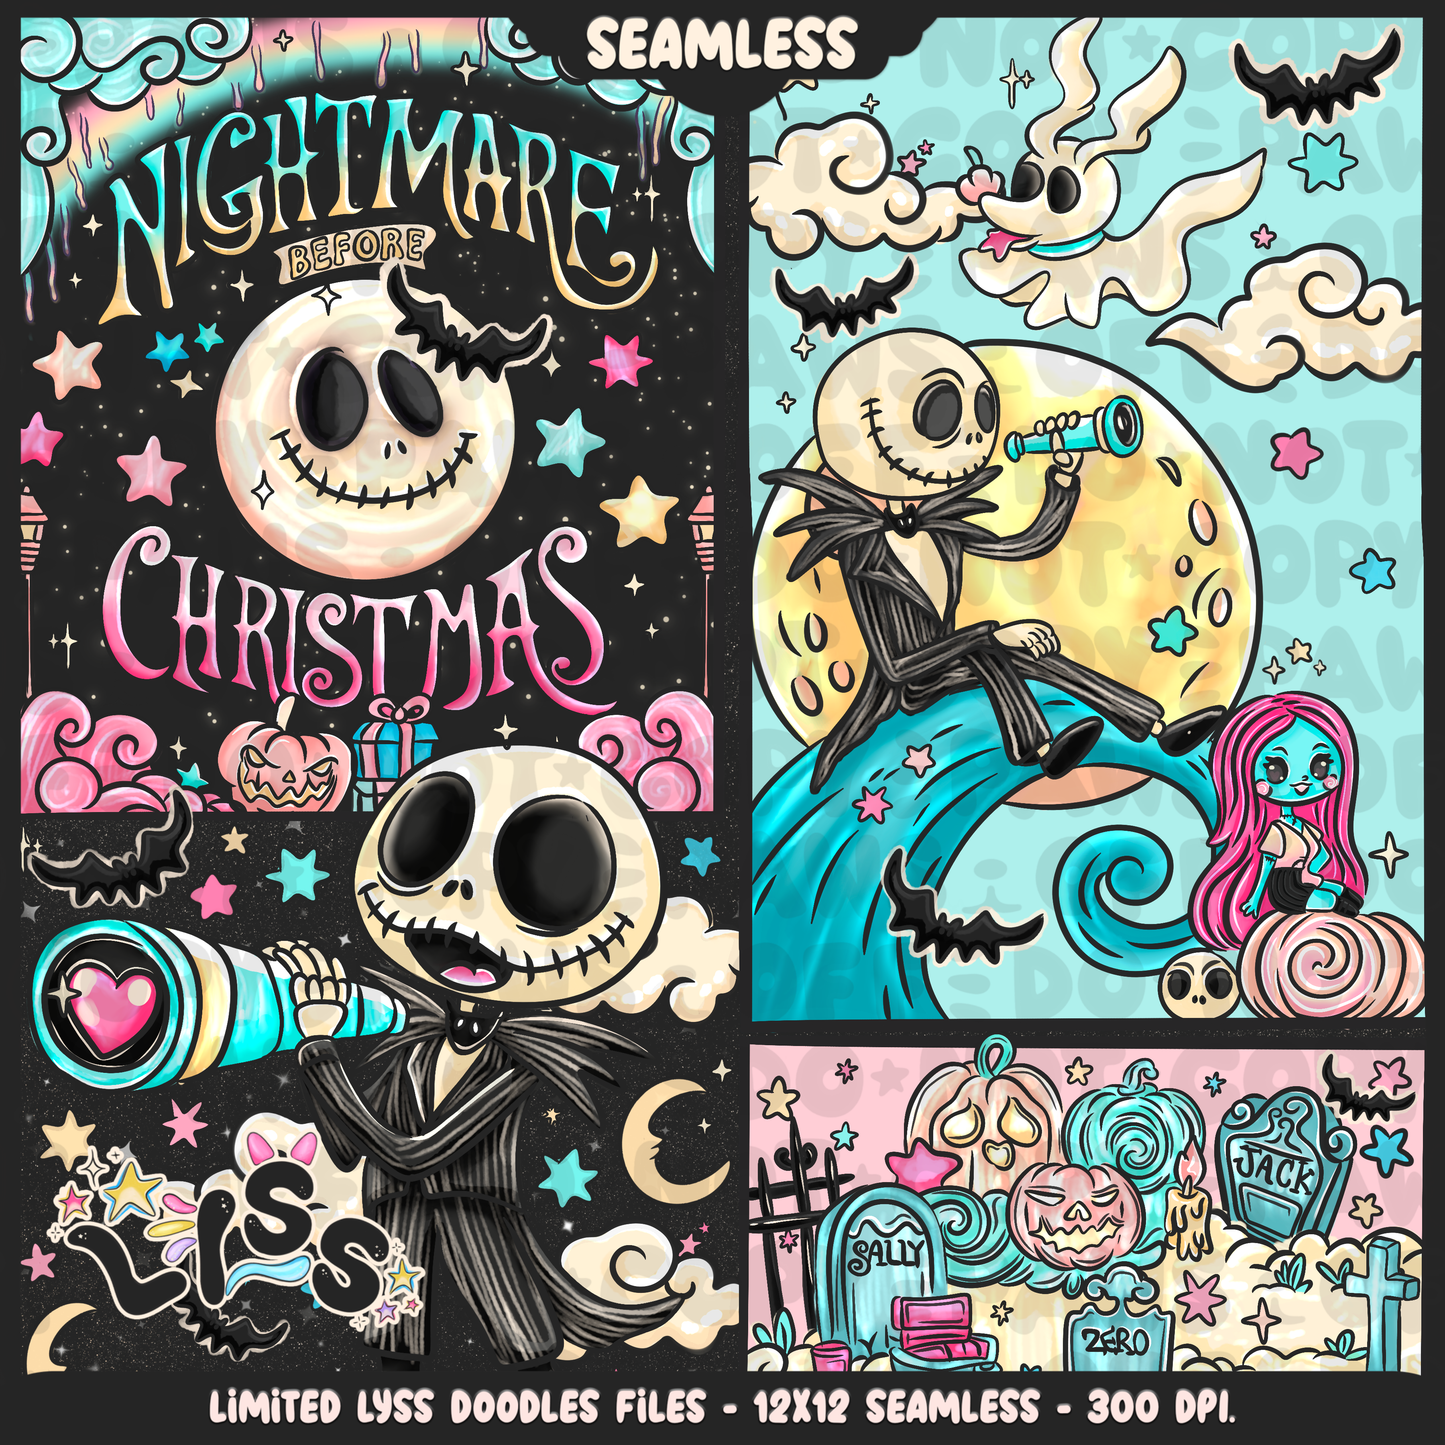 Lyss Doodles - Seamless - Mains - Celestial Nightmare - 24LD036